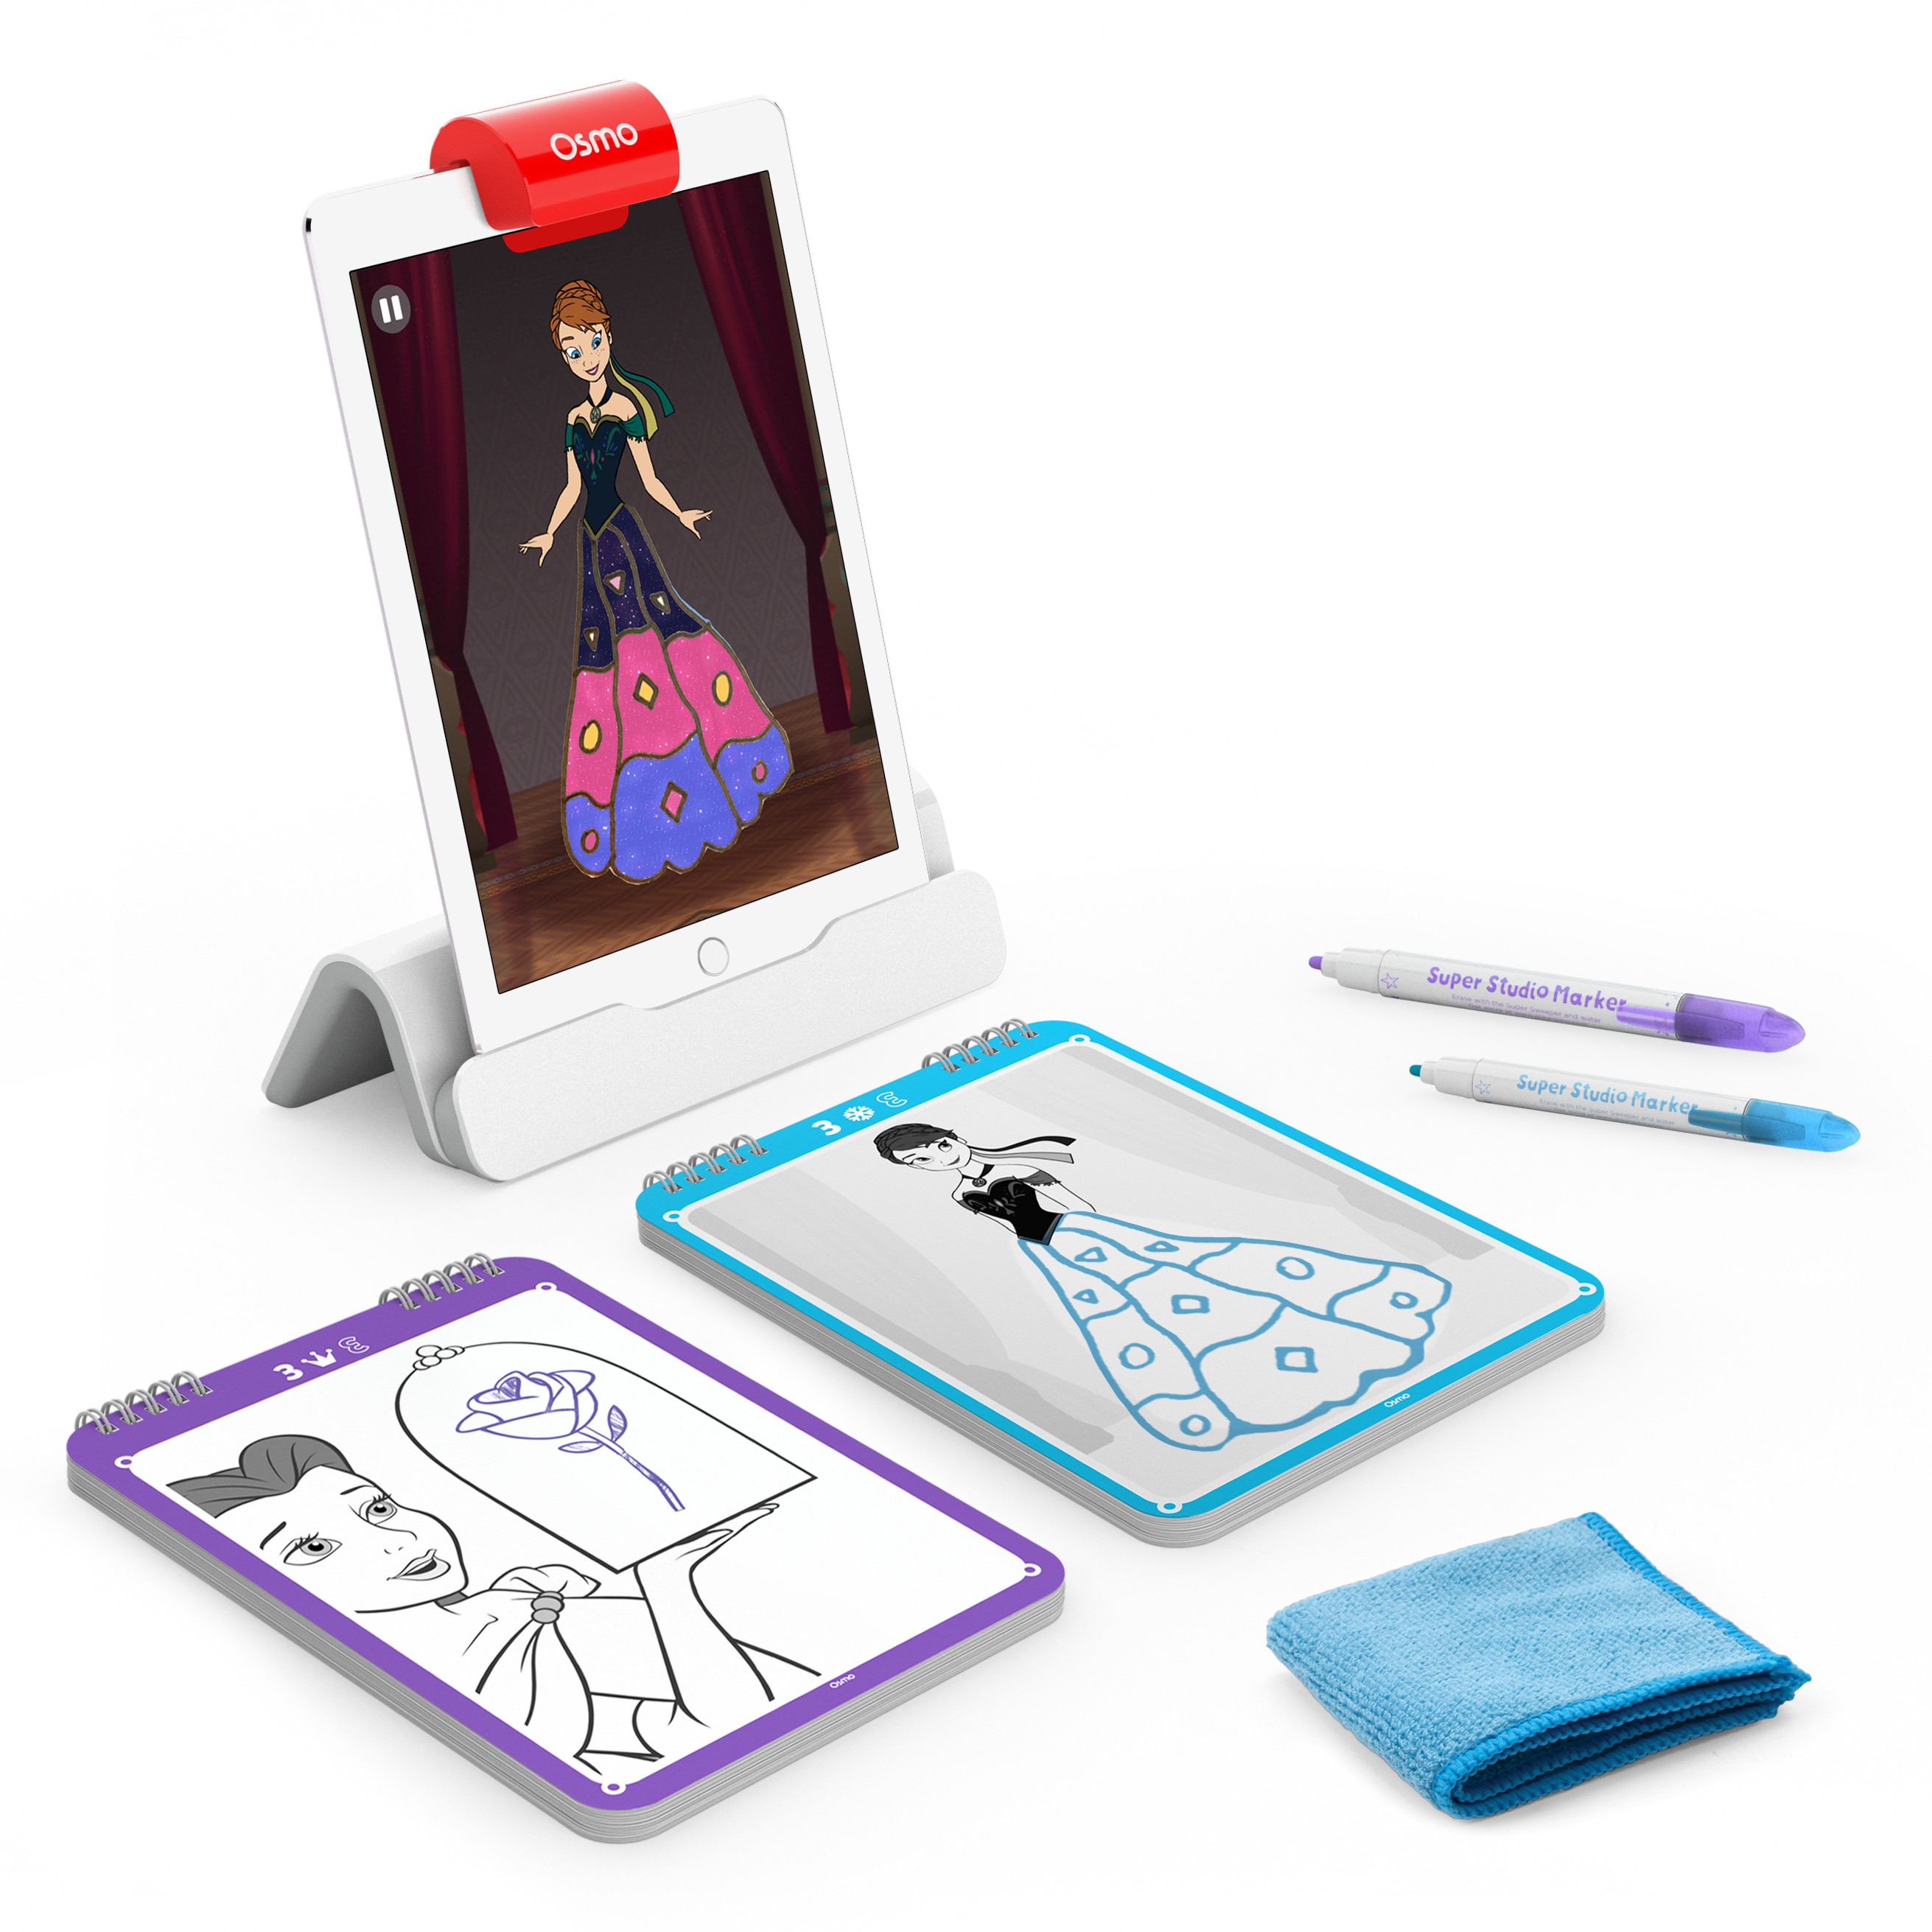 Nueva versión para iPad-Edades 5-10-Dibujo Creativo y resolución de Problemas/Física temprana-Base Stem incluida Osmo 901-00014 Starter Kit Tangible Play, Inc 